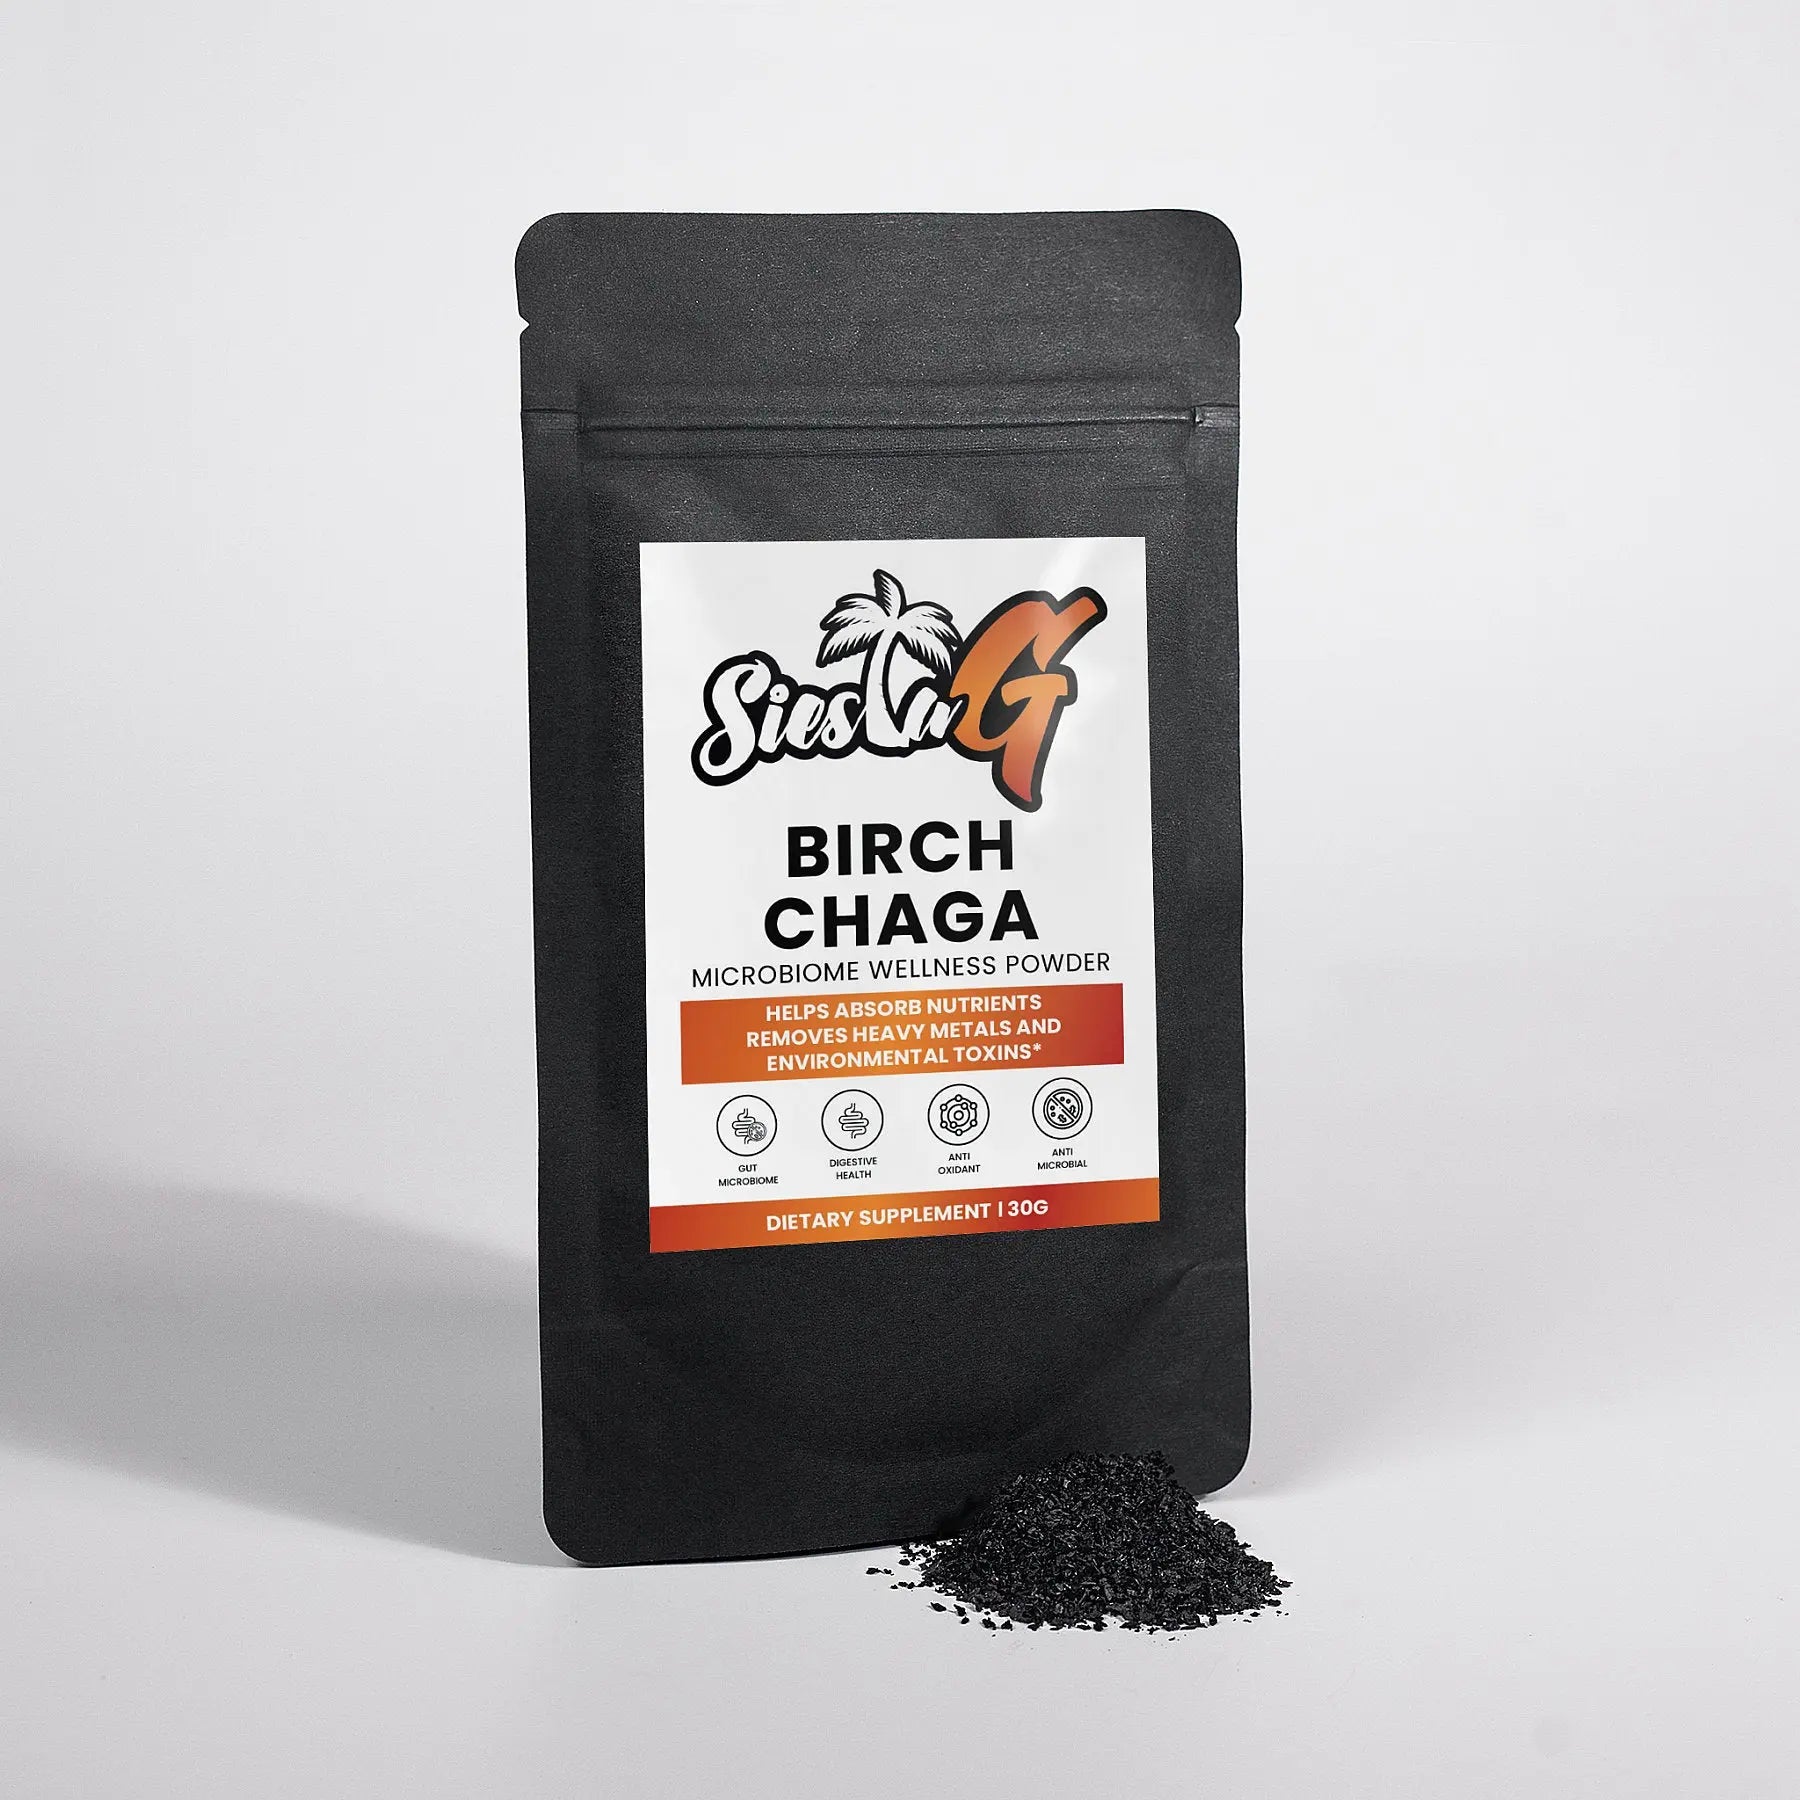 Natural Extracts Birch Chaga Microbiome Wellness Powder Siesta G Siesta G Dispensary